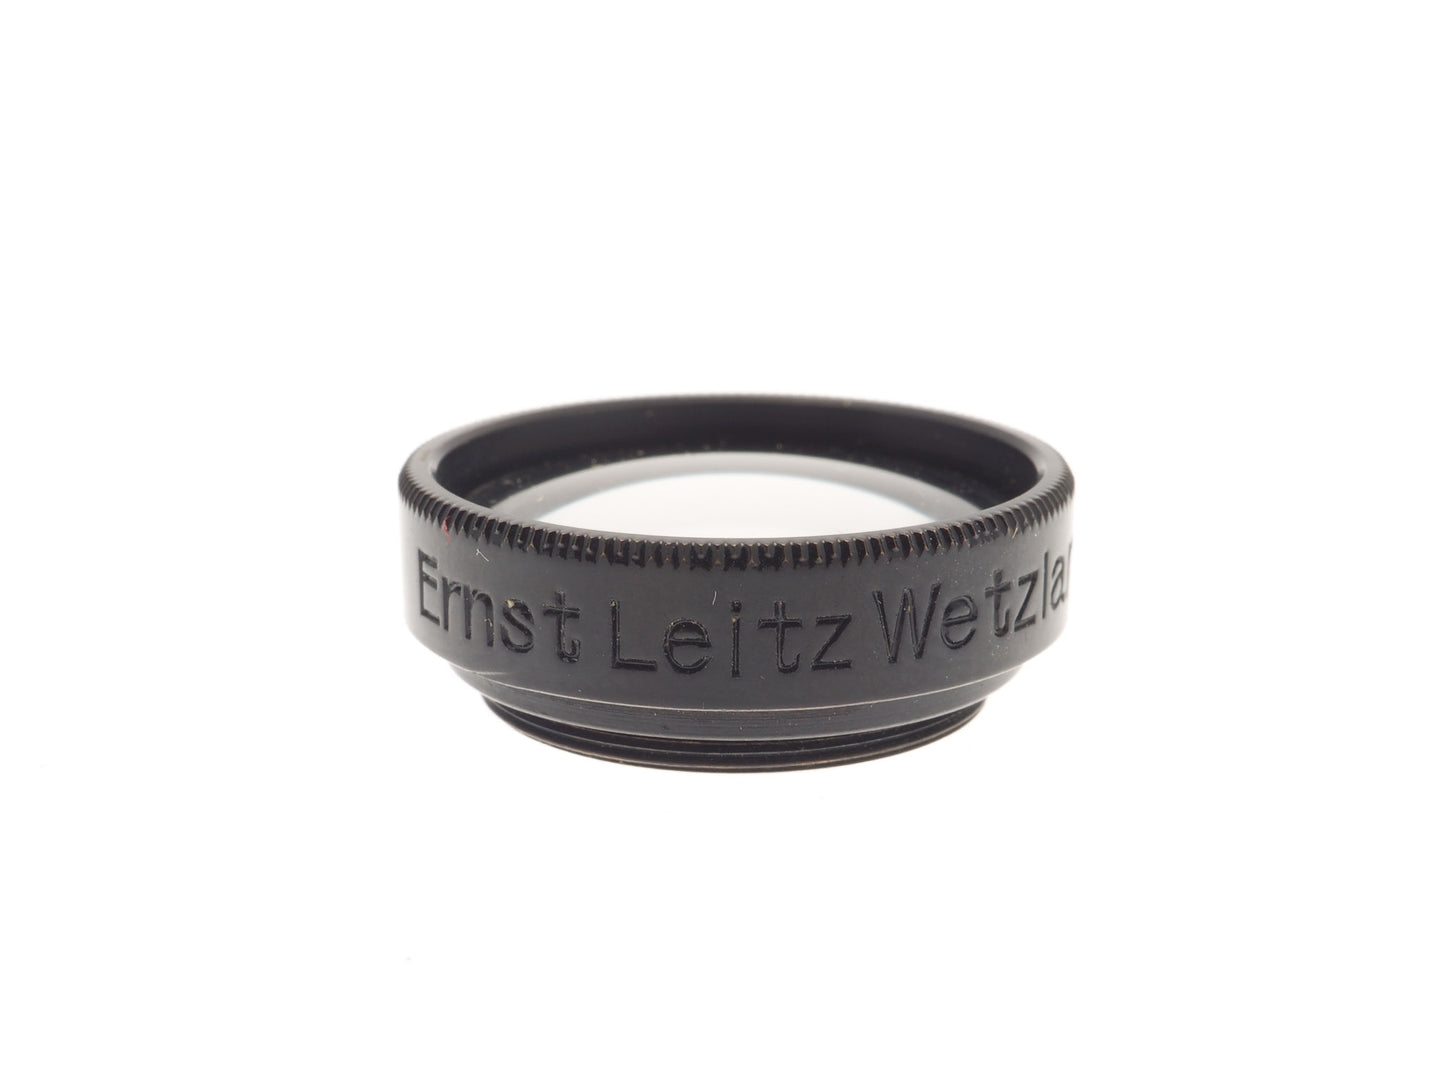 Leica Vorsatzlinse 2 (ELPIK) - Accessory